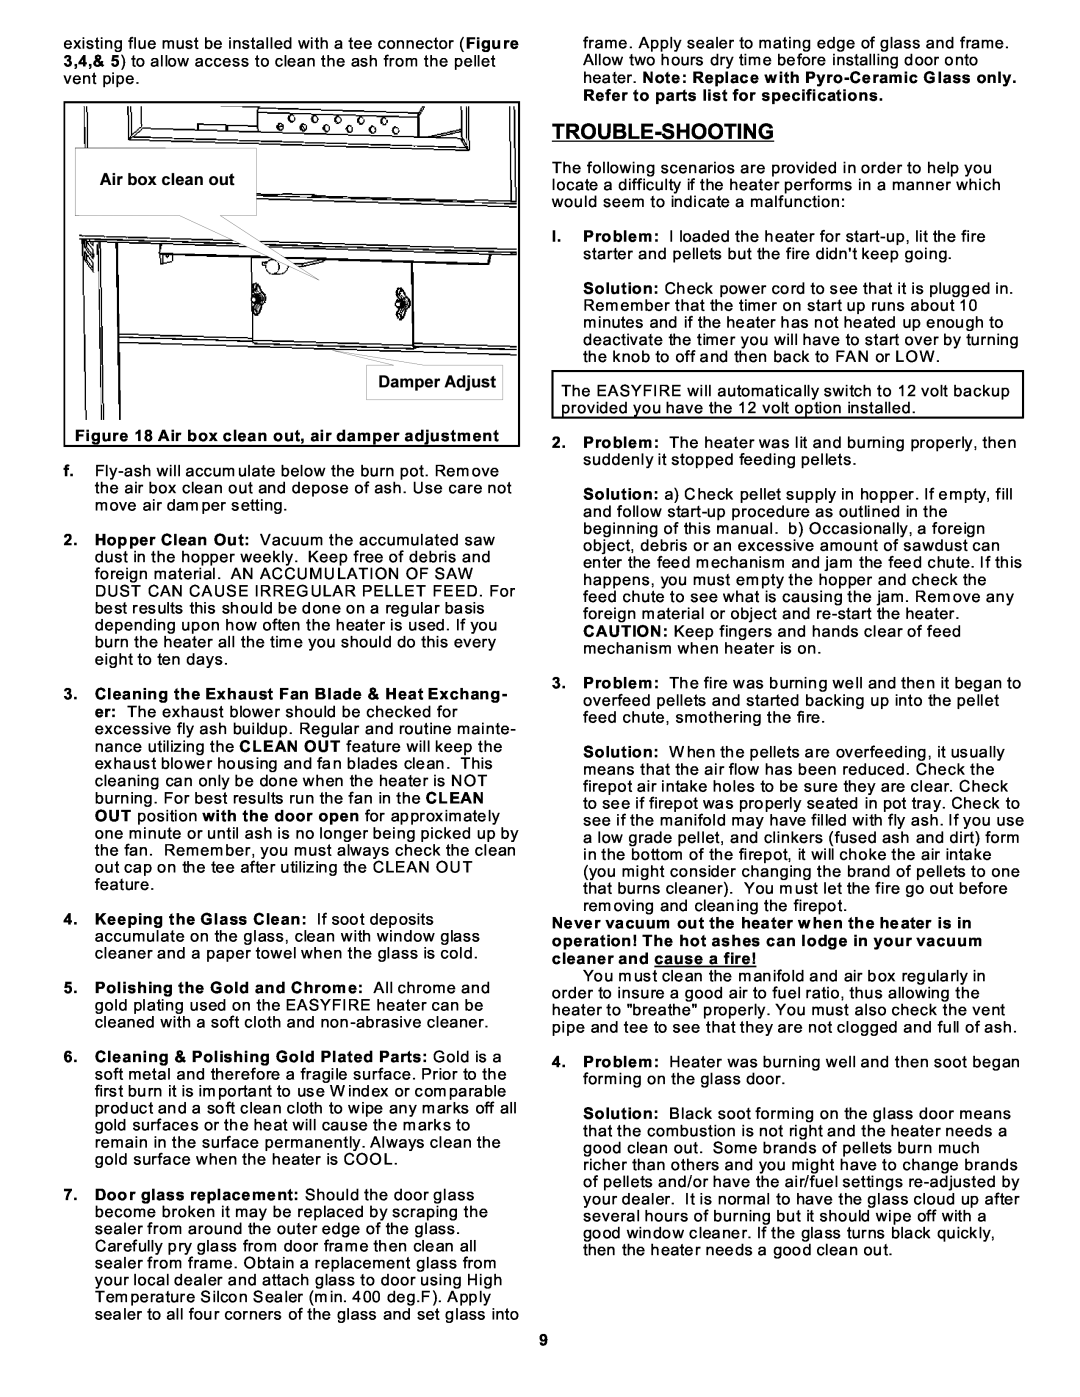 Sierra Products EF-5001UB owner manual Trouble-Shooting 